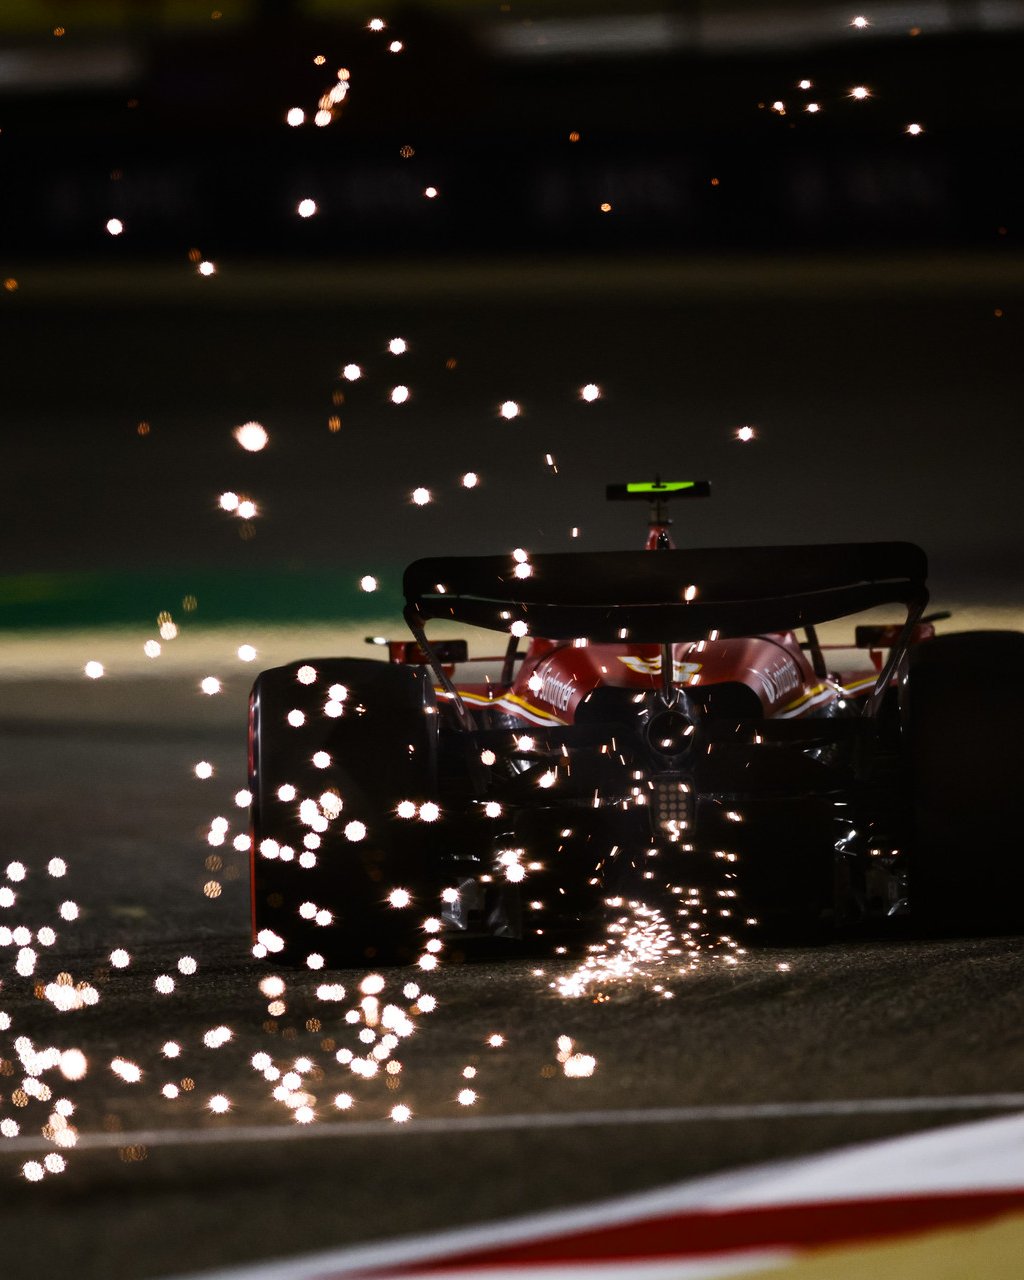 Scuderia Ferrari (@ScuderiaFerrari) / X